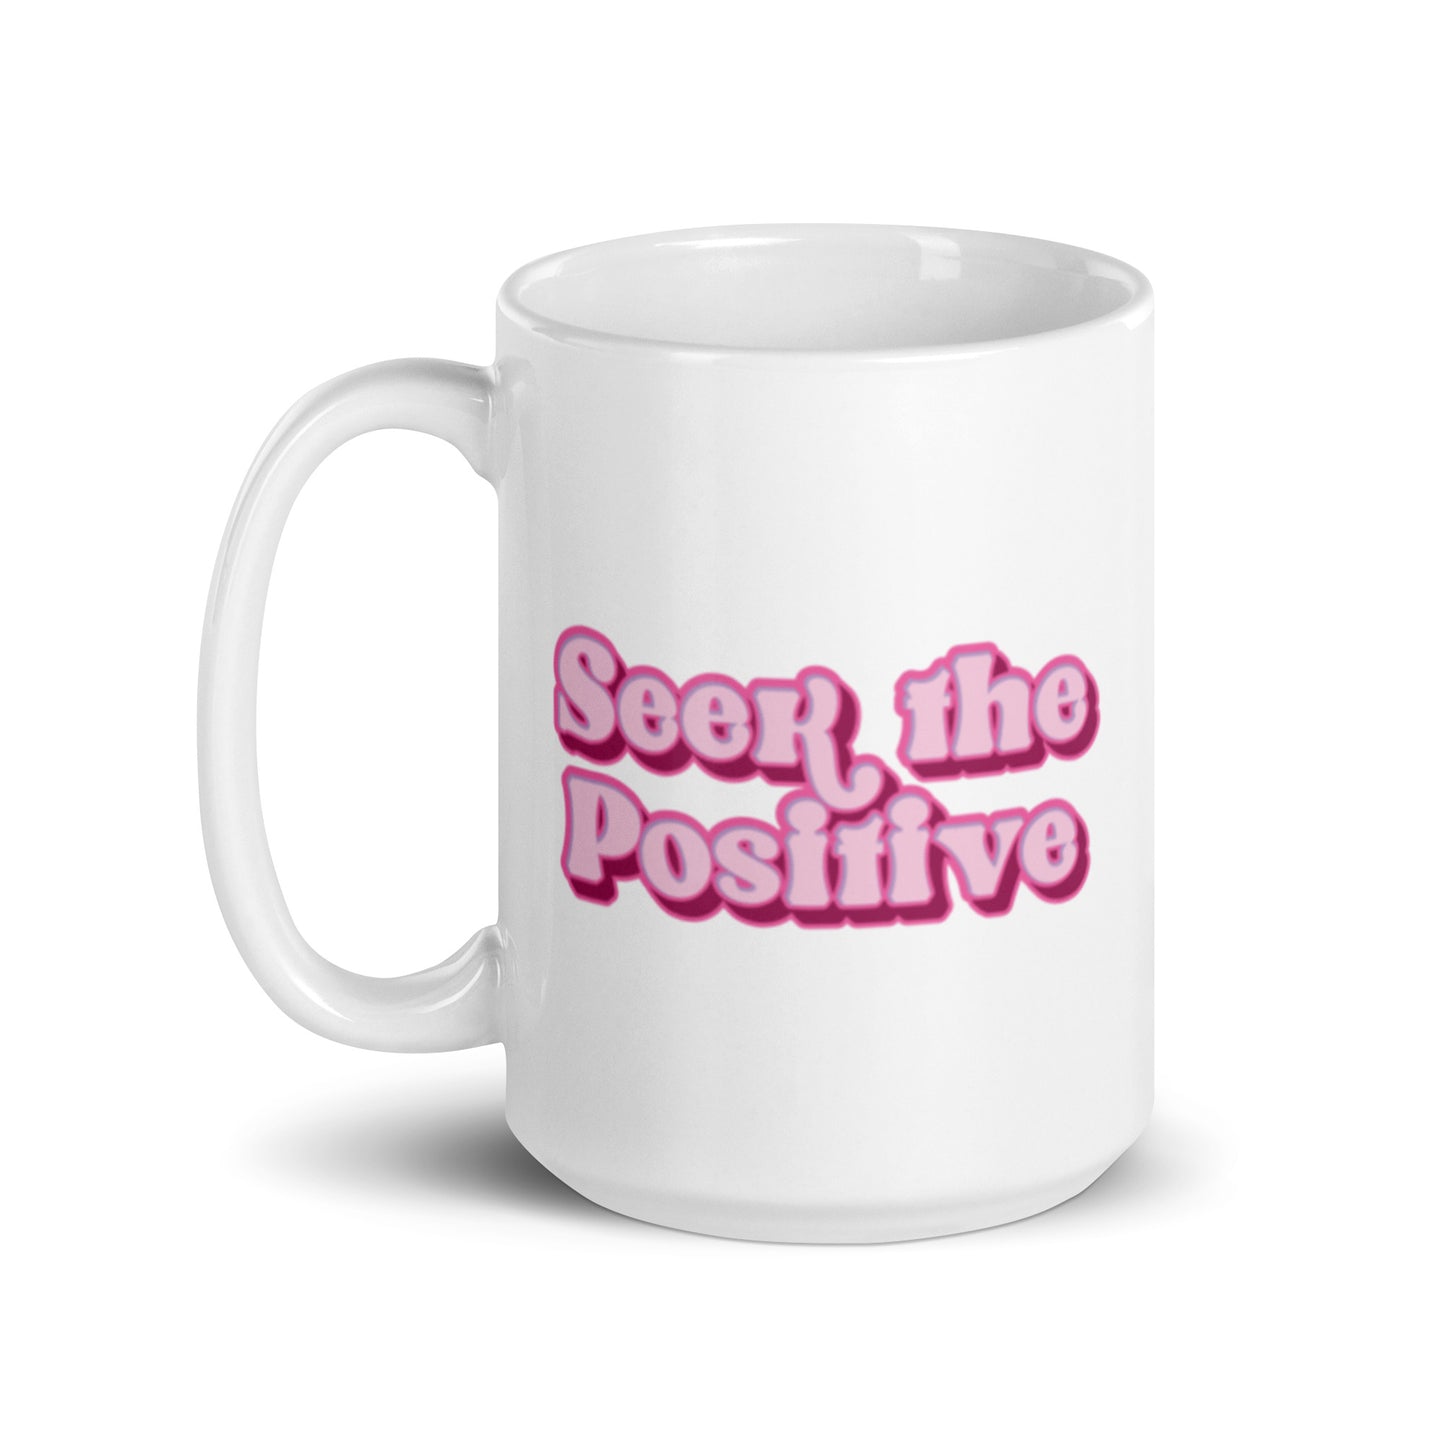 Seek The Positive XL White Glossy Mug (15oz)